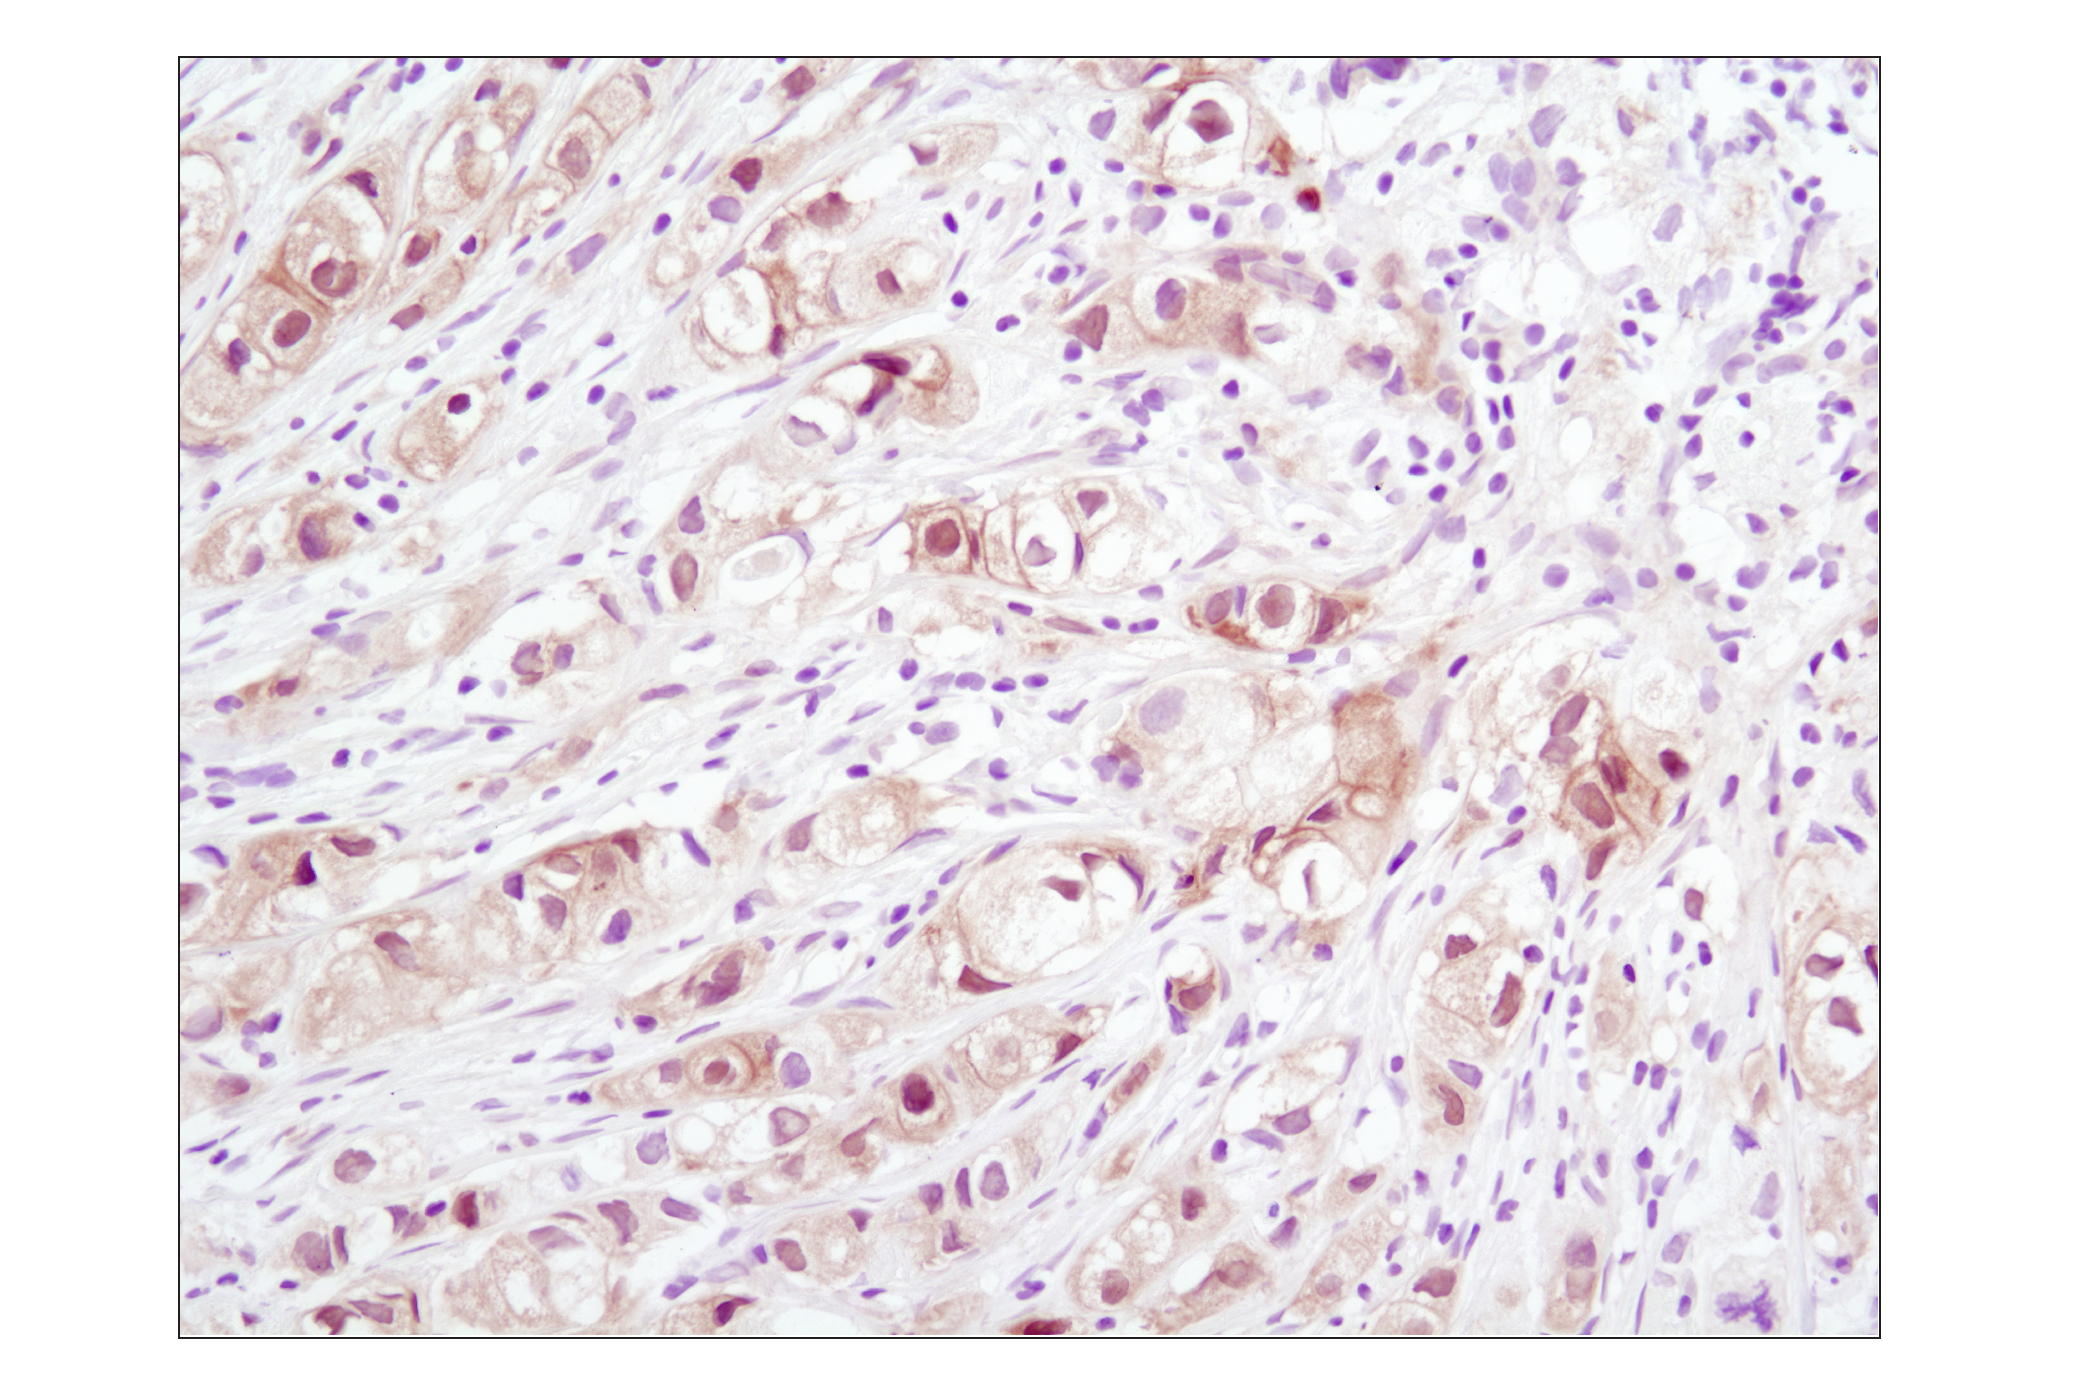  Image 29: Microglia Interferon-Related Module Antibody Sampler Kit